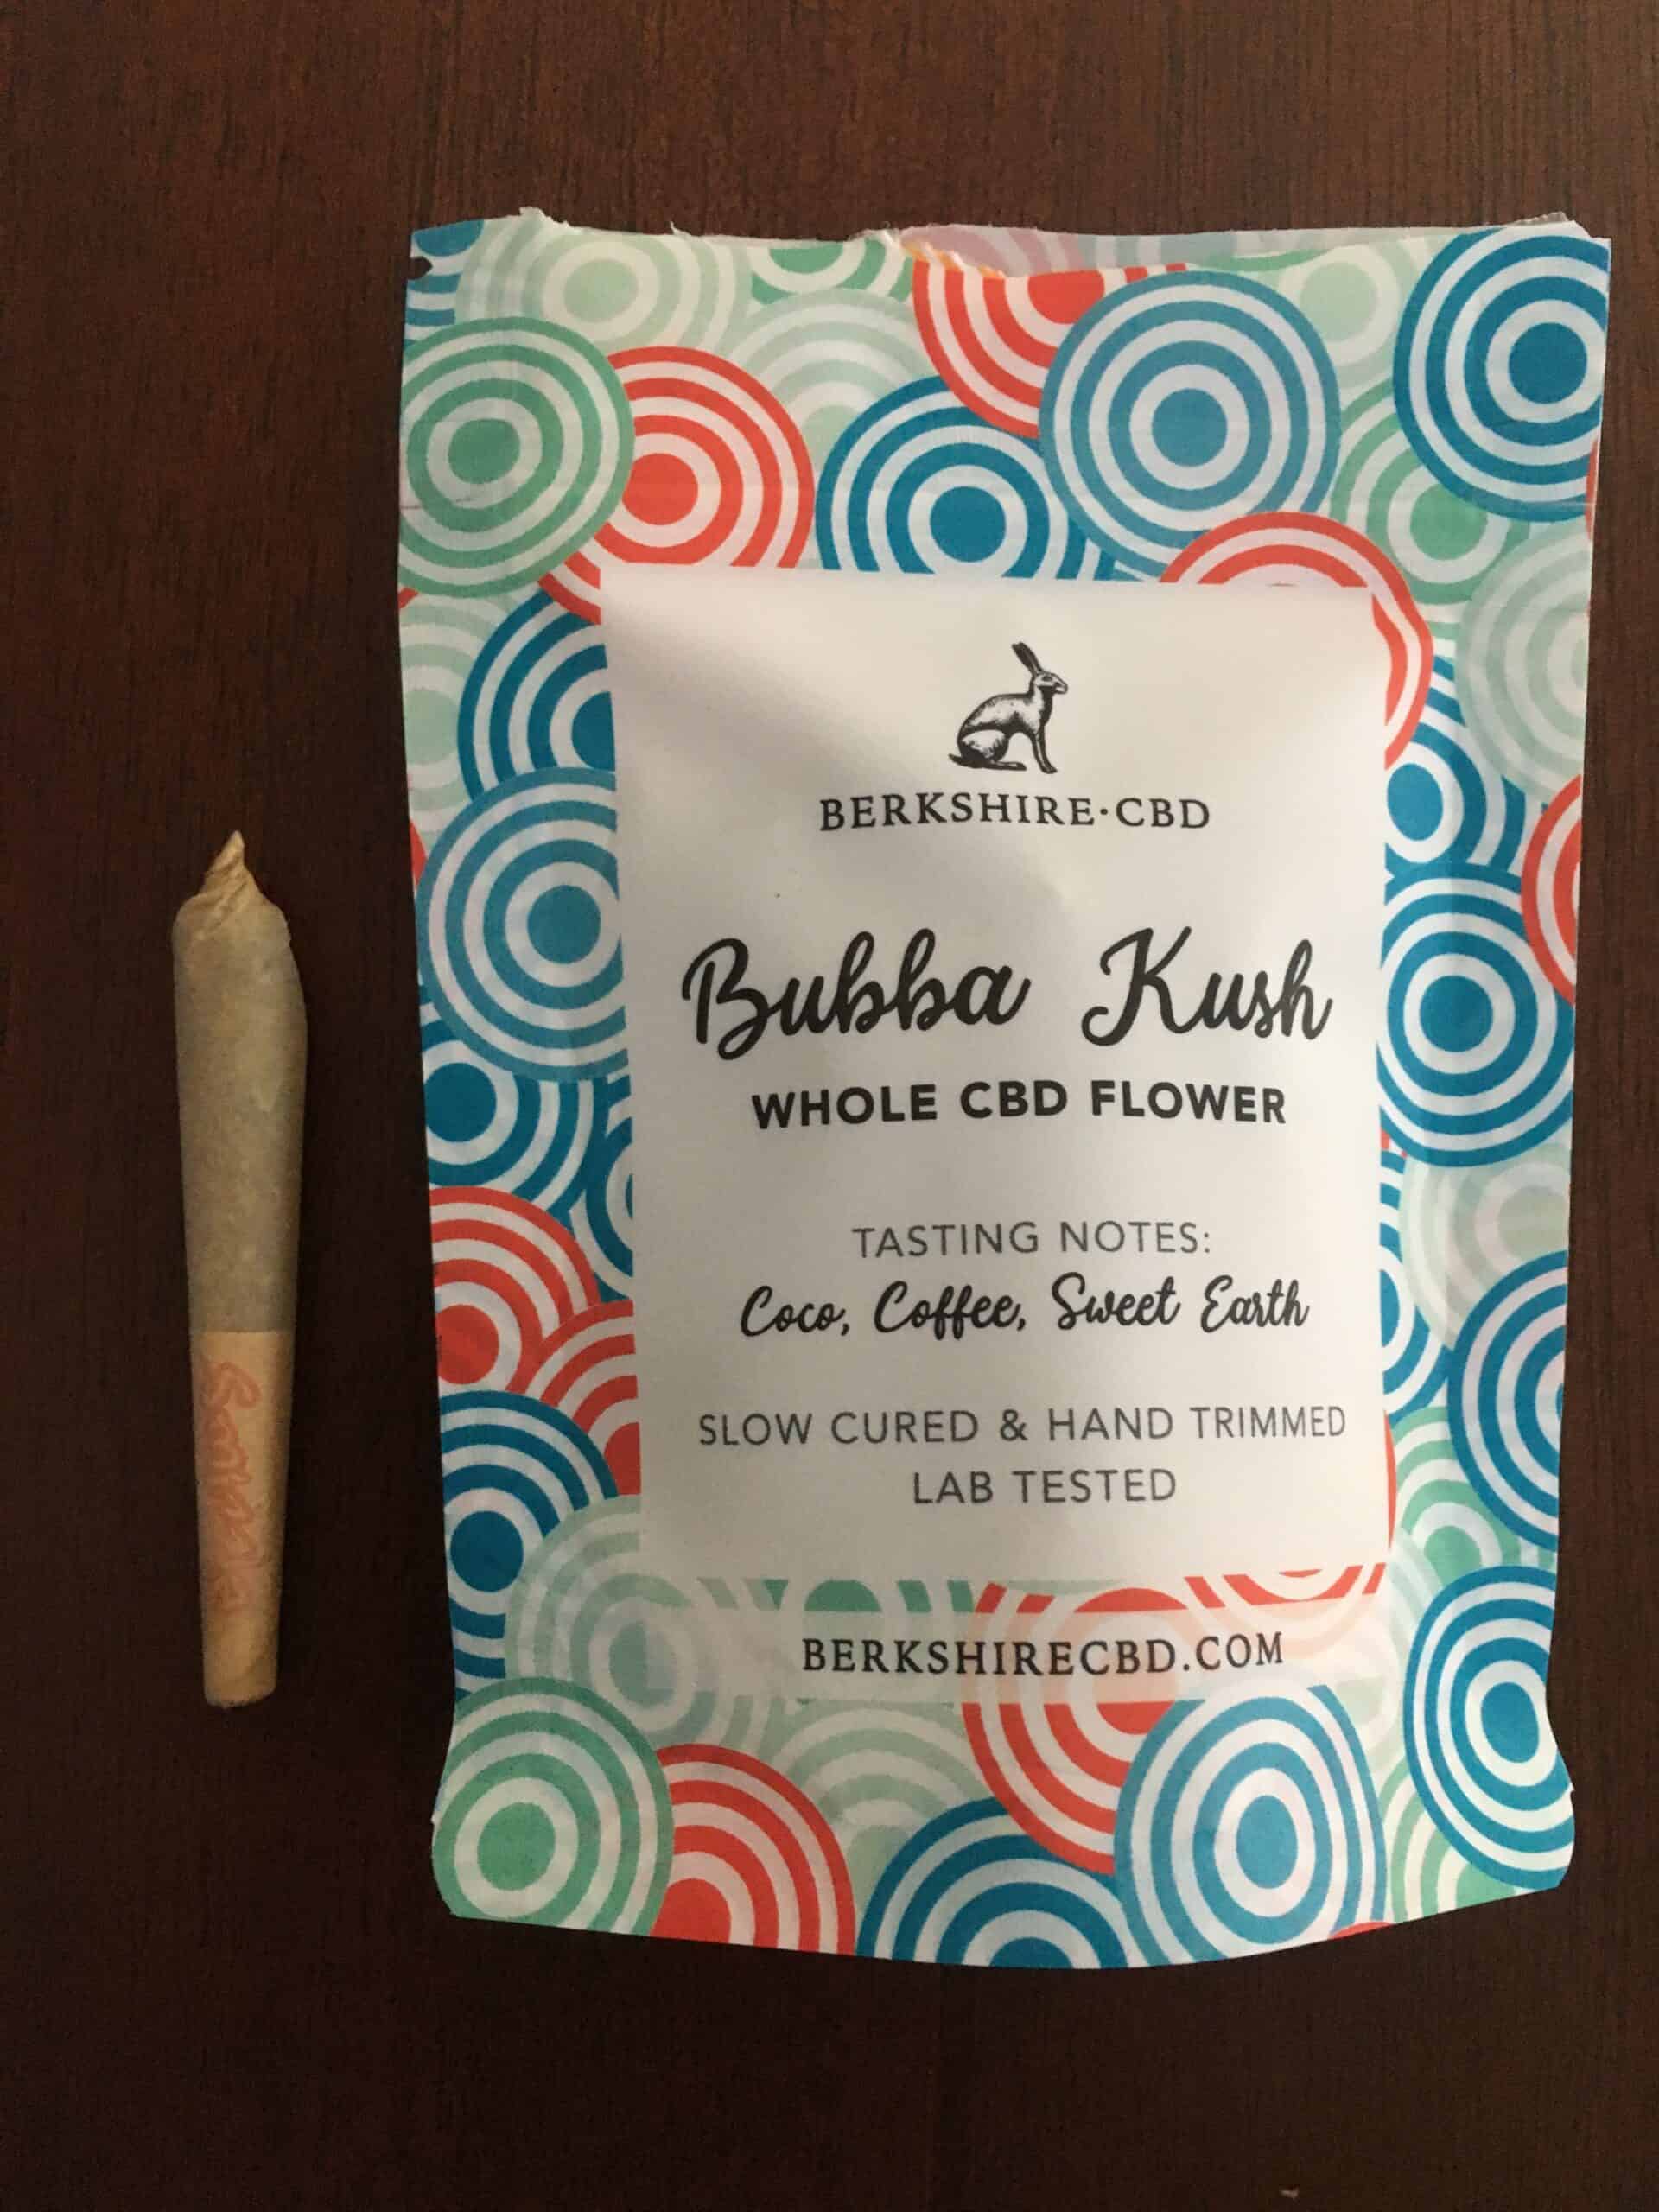 Berkshire CBD Bubba Kush Whole Hemp Flower Save On Cannabis Review Testing Process